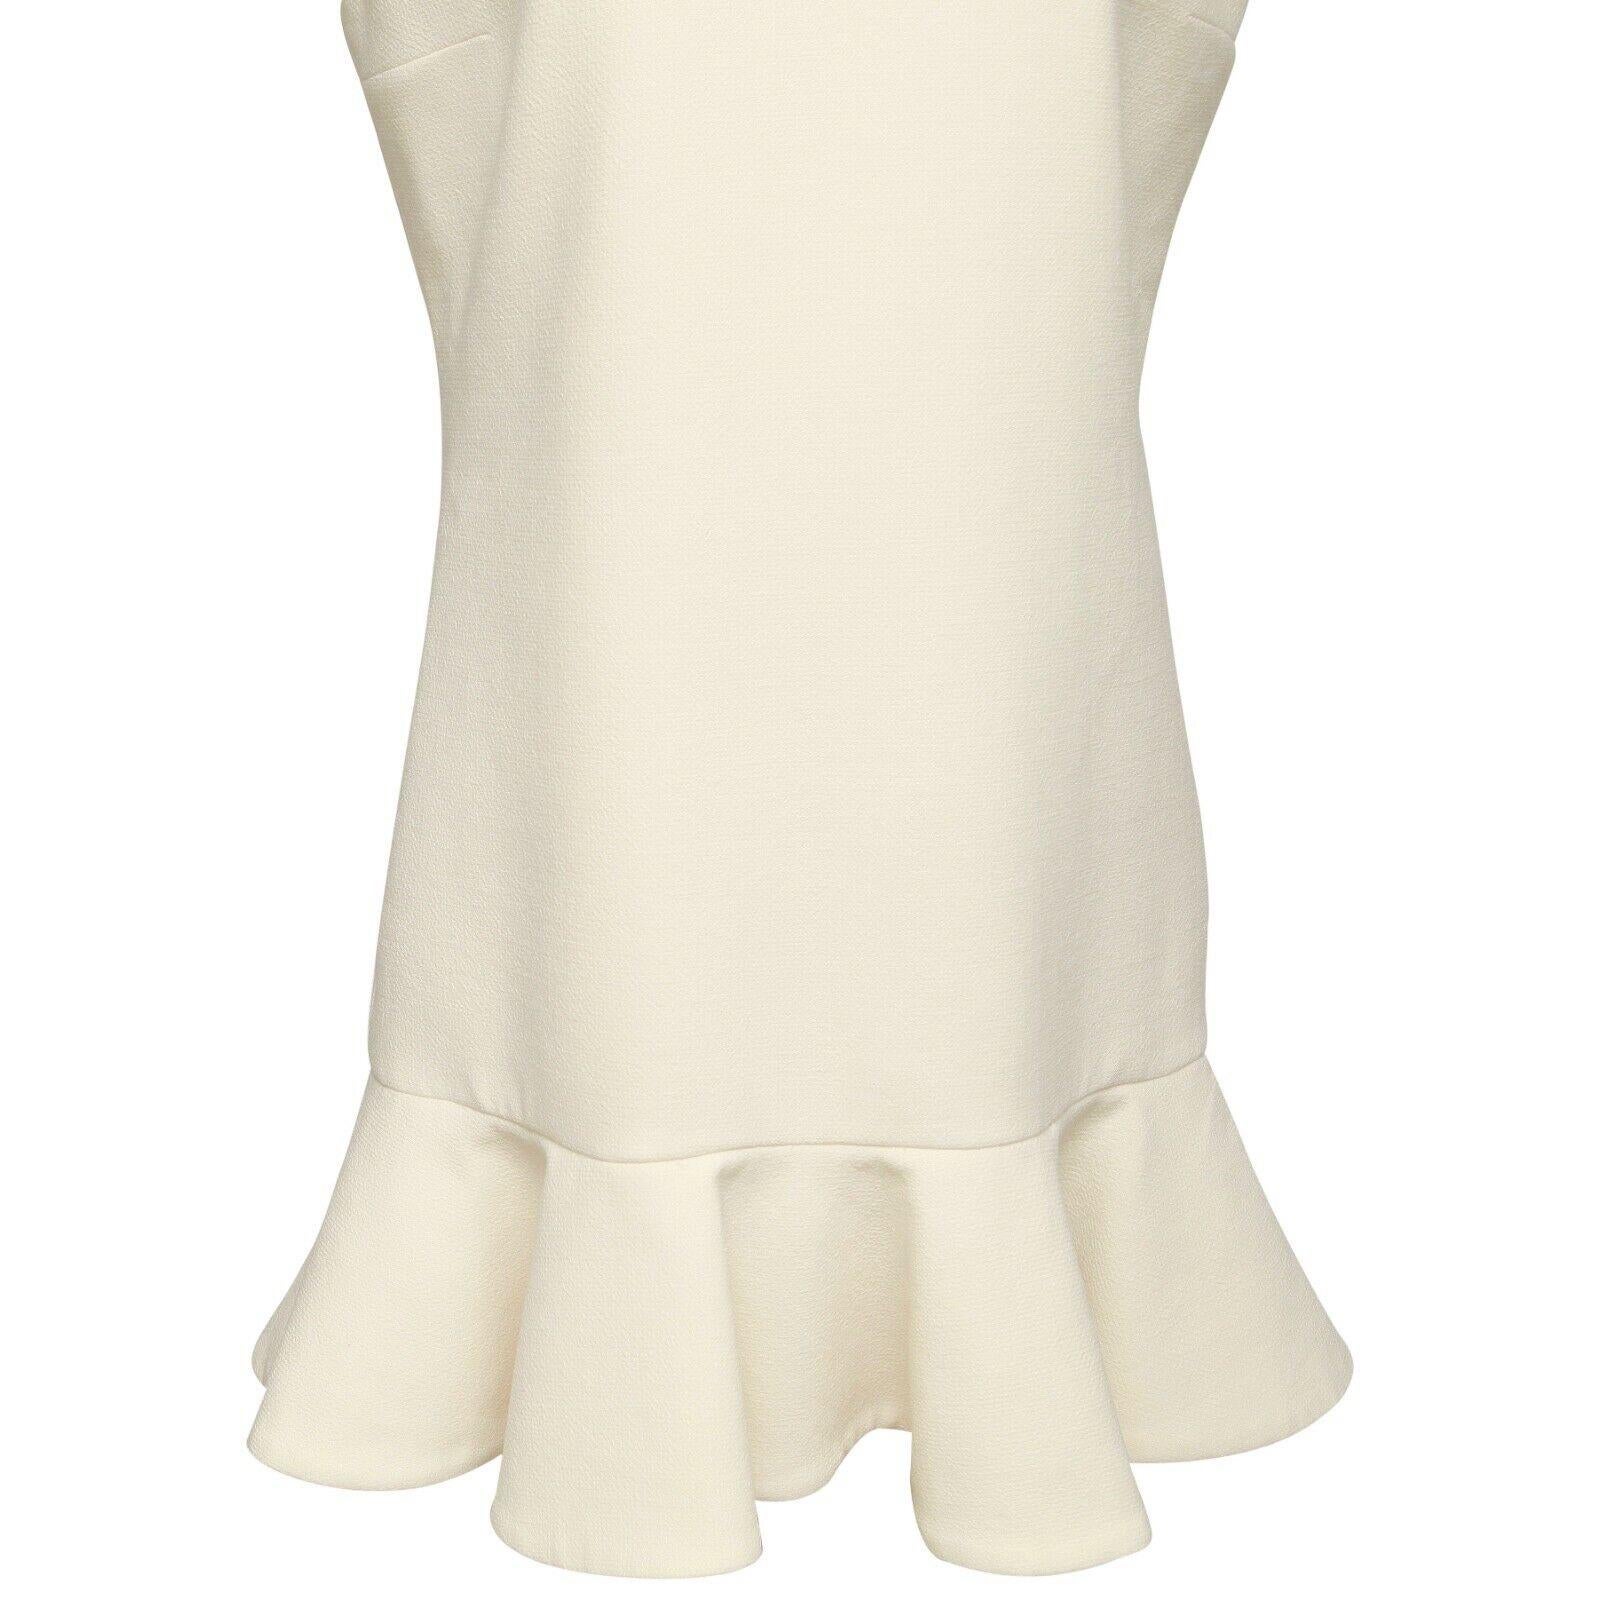 VICTORIA VICTORIA BECKHAM Ivory Dress Sleeveless Wool Crepe Flared Sz M For Sale 1